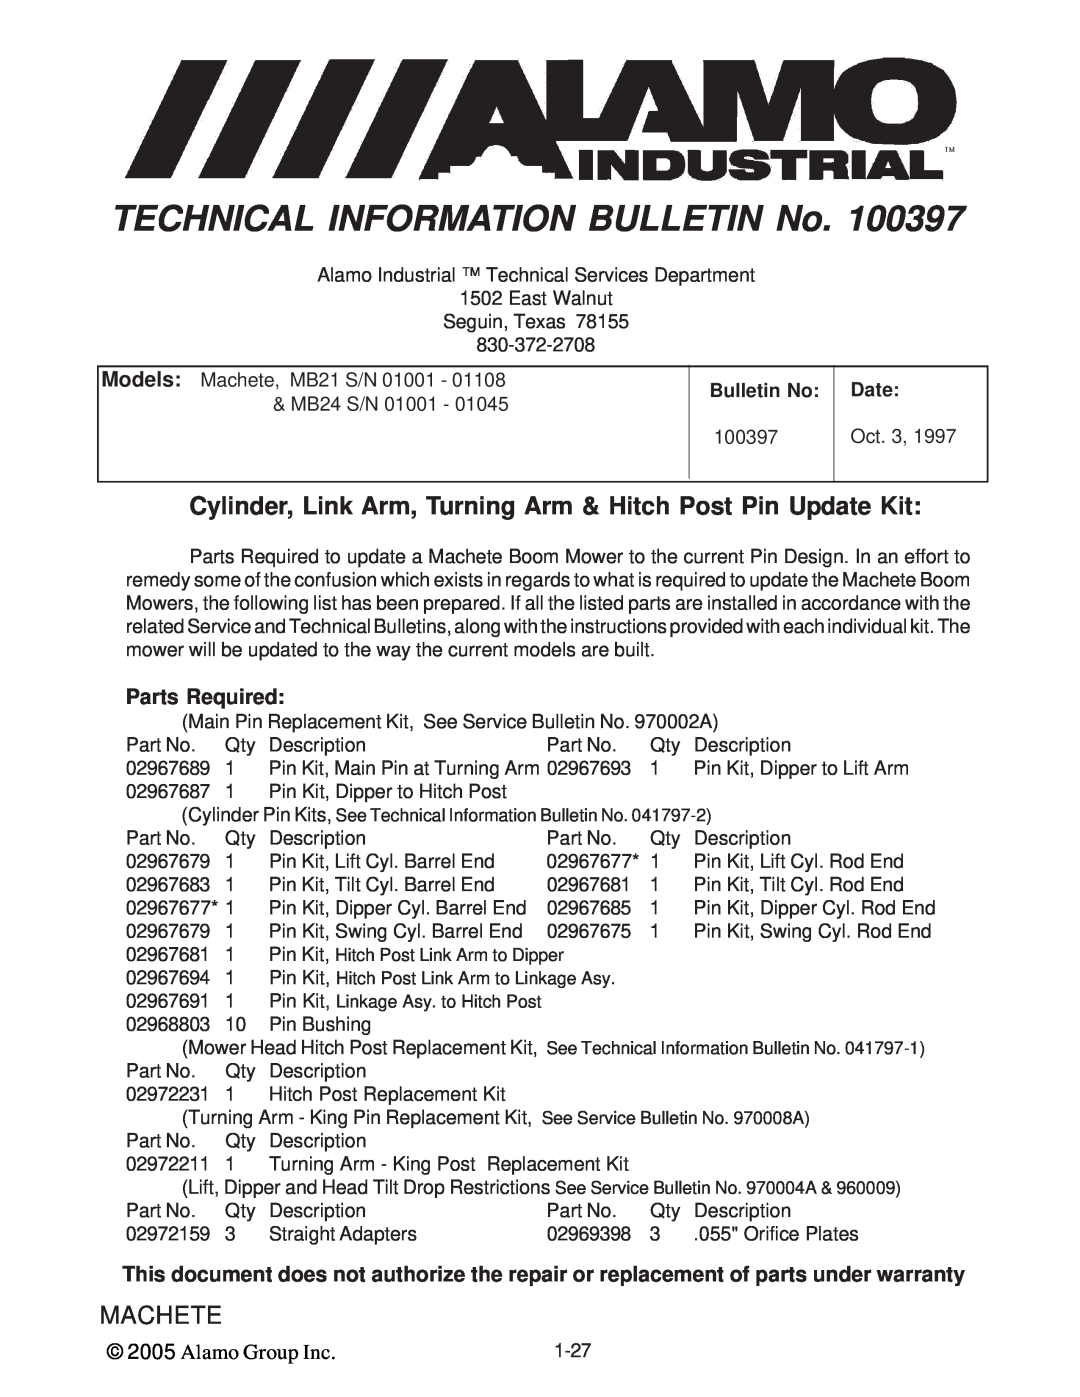 Alamo T 7740 manual Parts Required, TECHNICAL INFORMATION BULLETIN No, Machete, Alamo Group Inc, Bulletin No, Date 